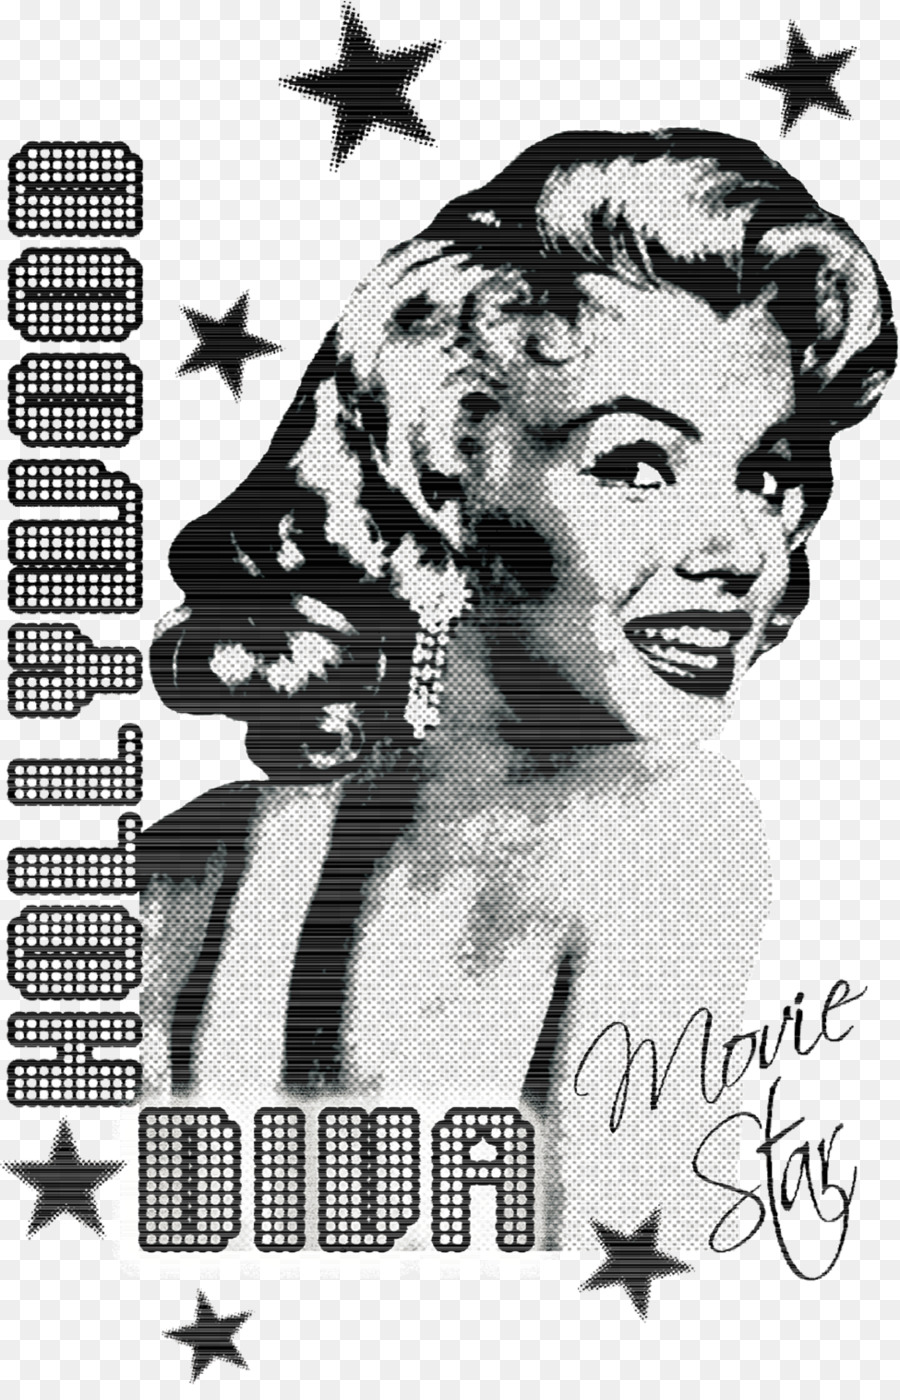 Marilyn Monroe T-shirt Printmaking Screen printing - Vector back smile Marilyn Monroe png download - 975*1500 - Free Transparent Marilyn Monroe png Download.